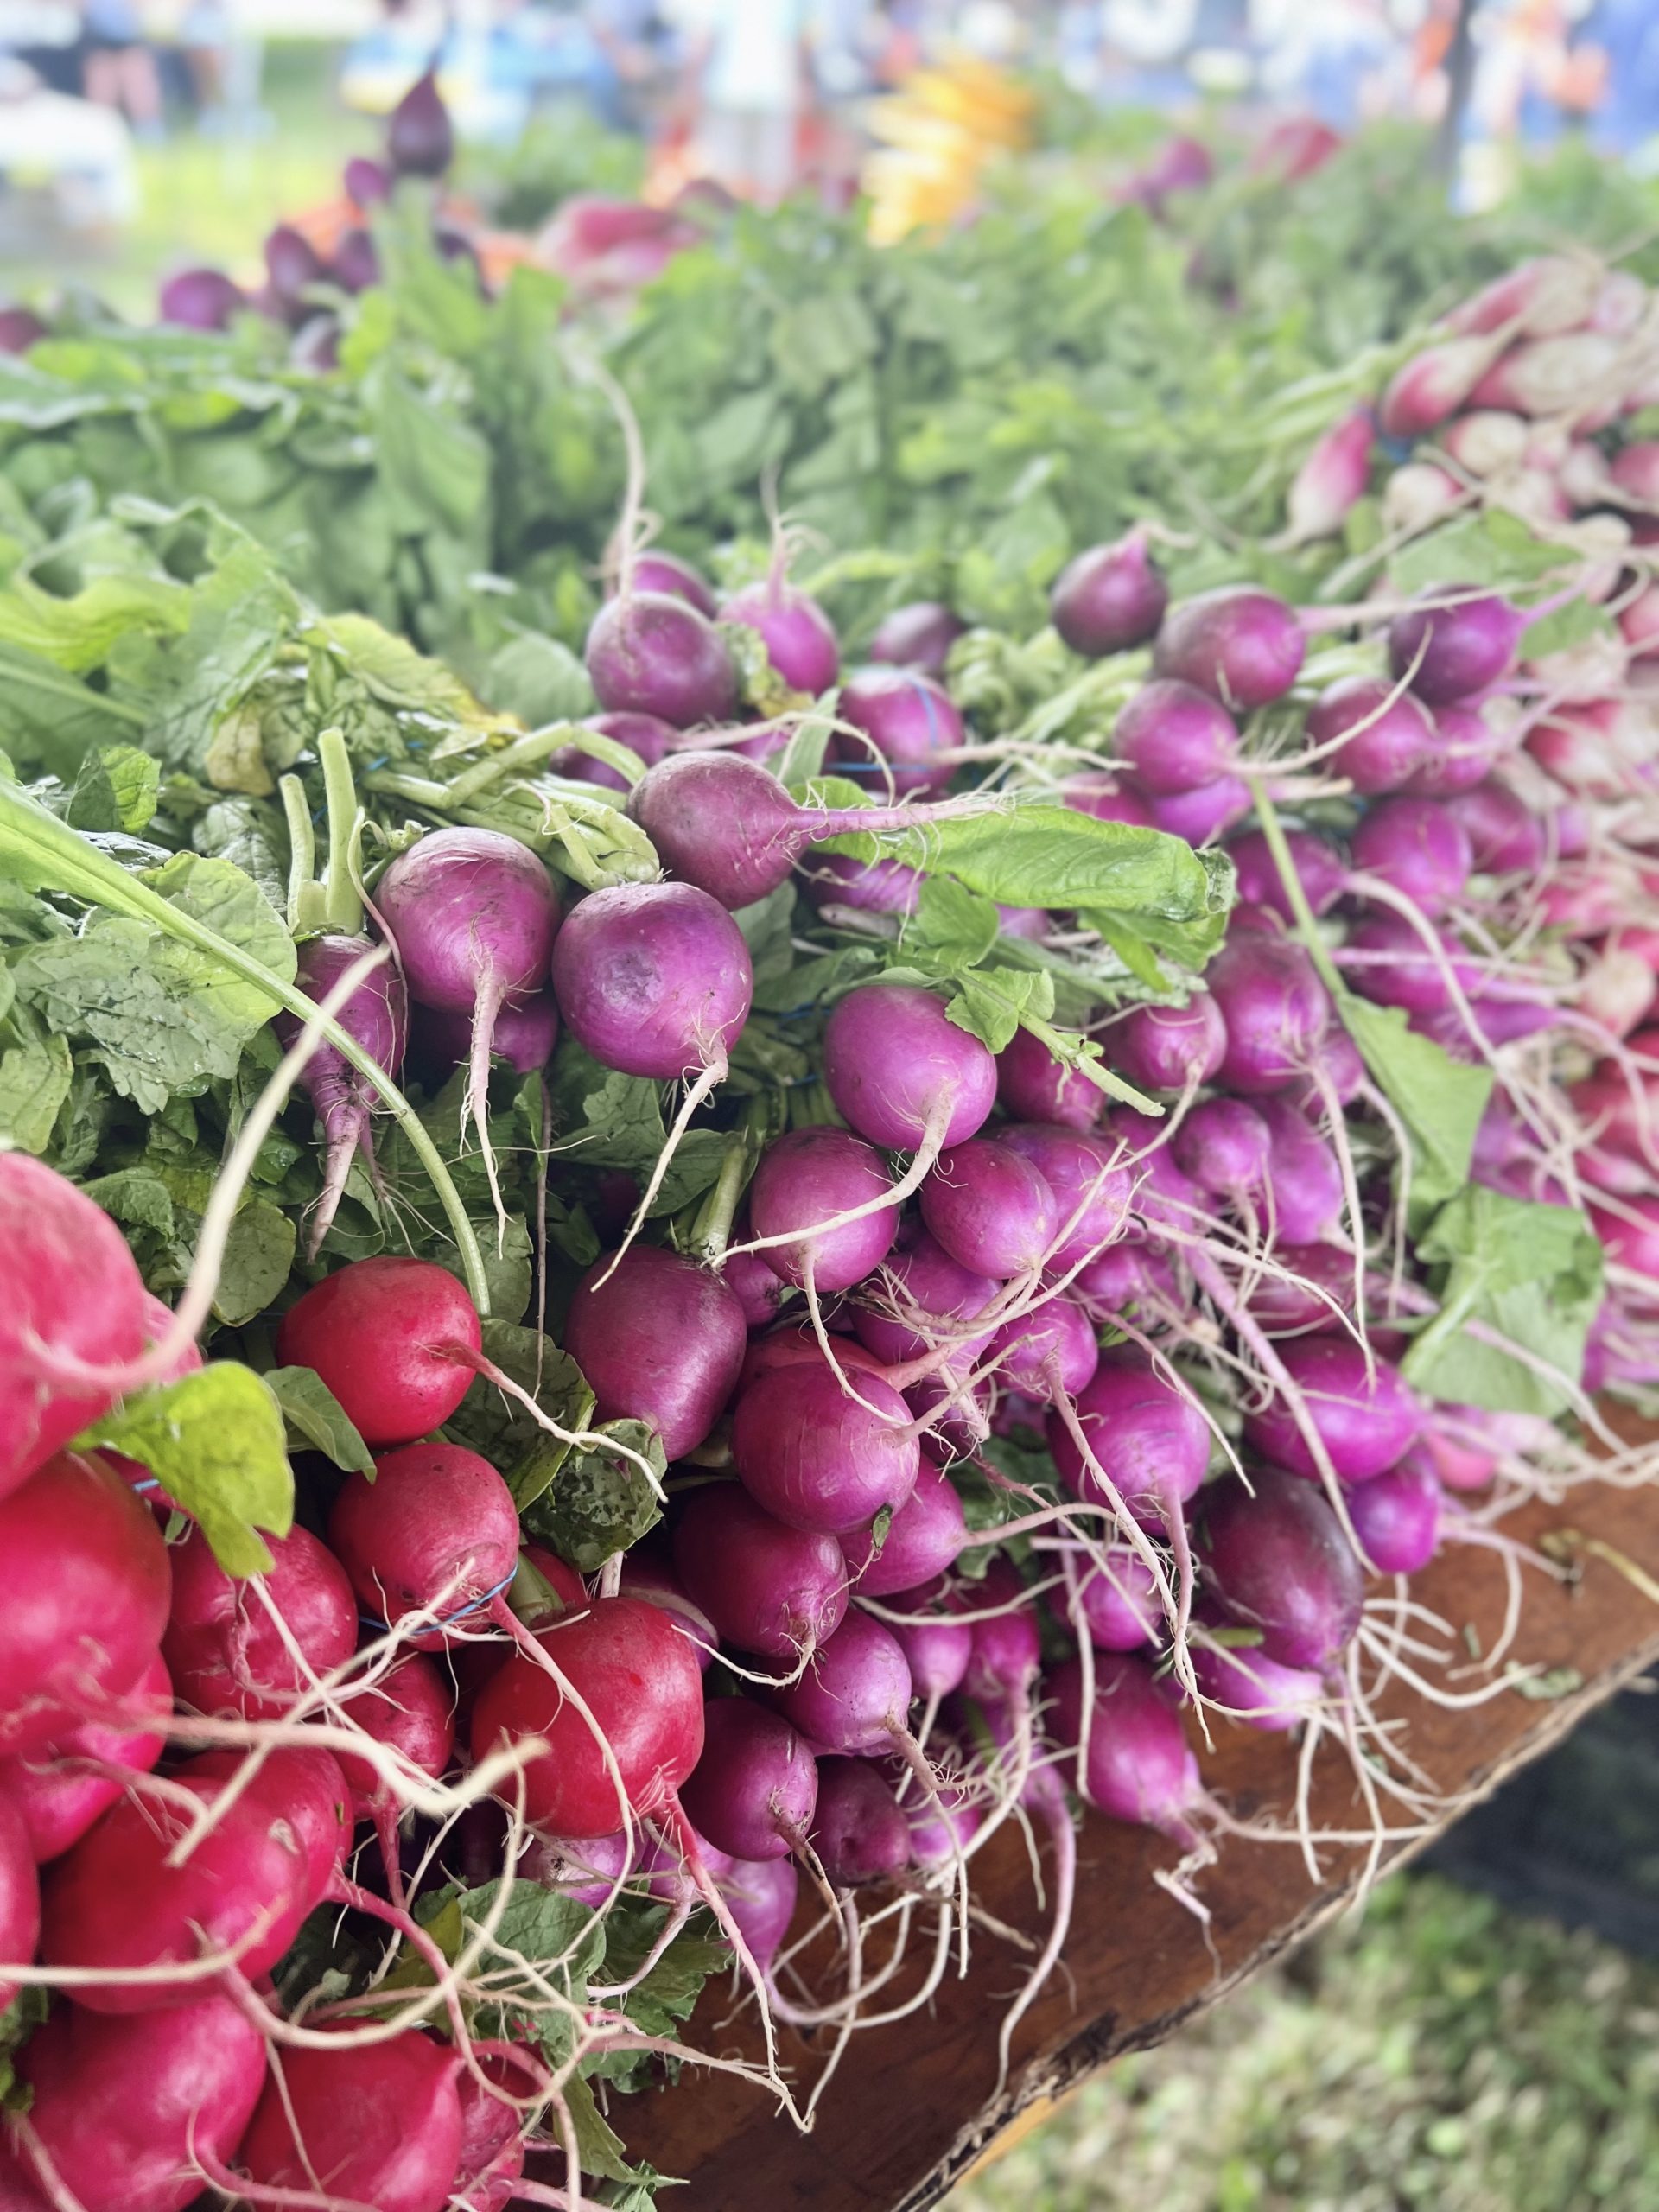 purple radishes at the farmer's market